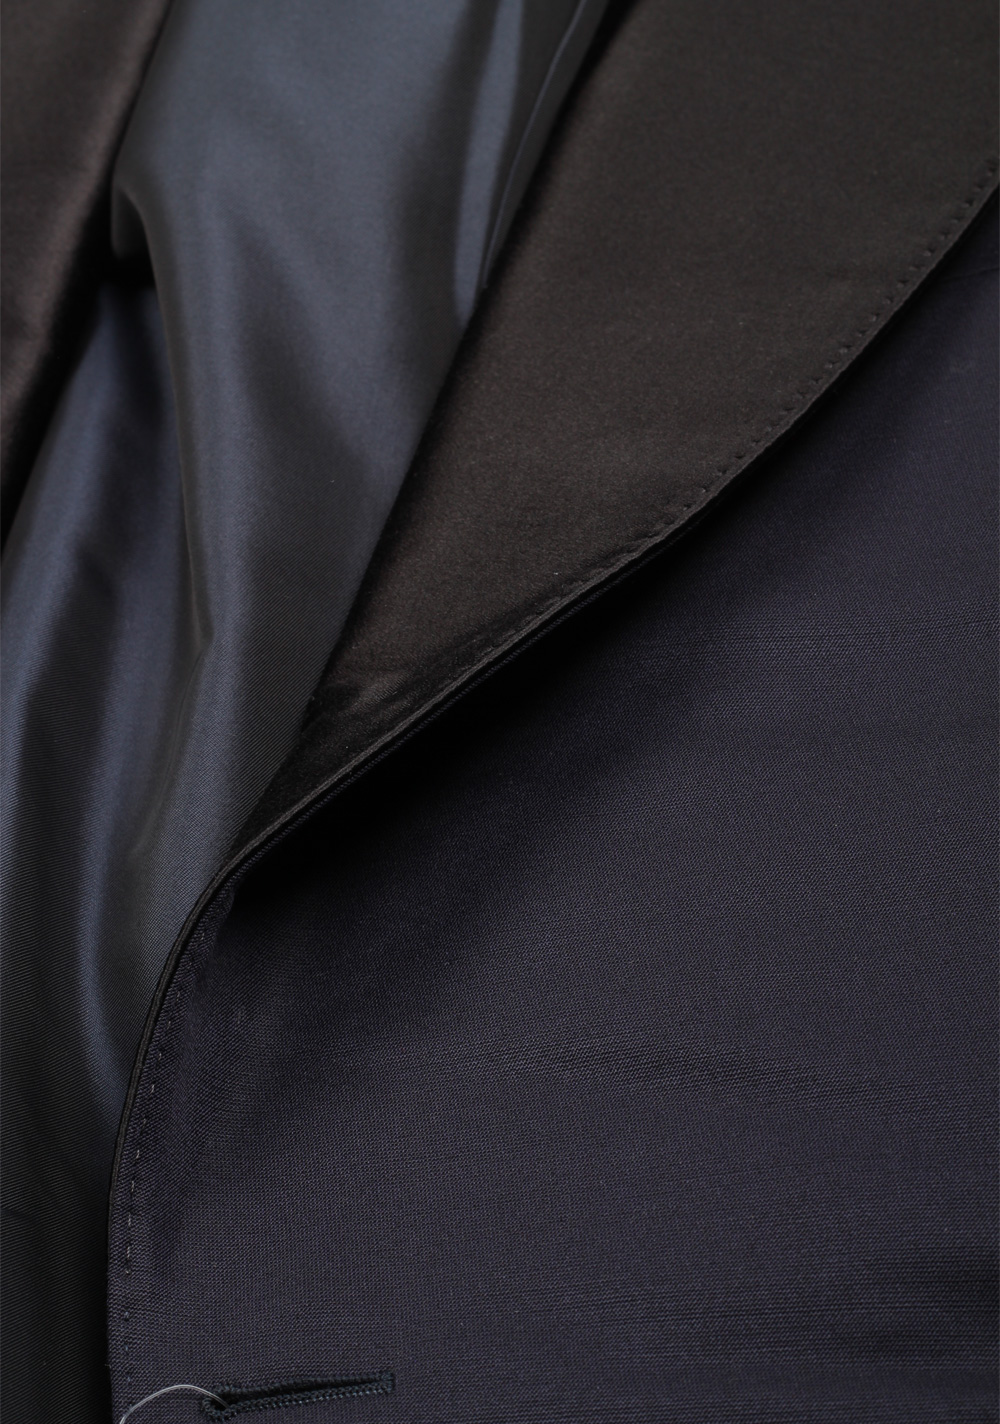 TOM FORD Atticus Midnight Blue Tuxedo Smoking Suit | Costume Limité